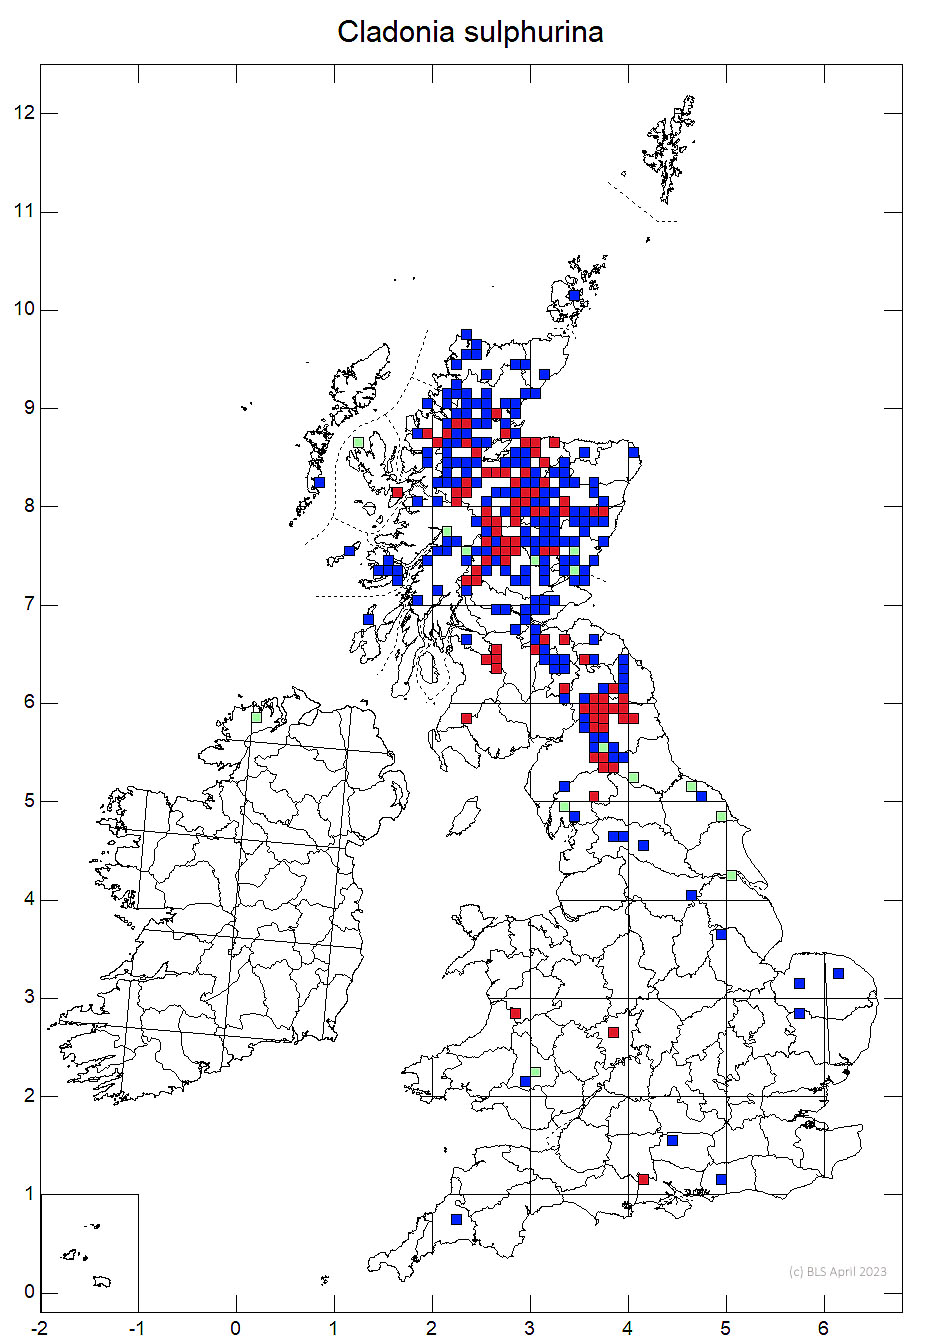 Cladonia sulphurina 10km sq distribution map